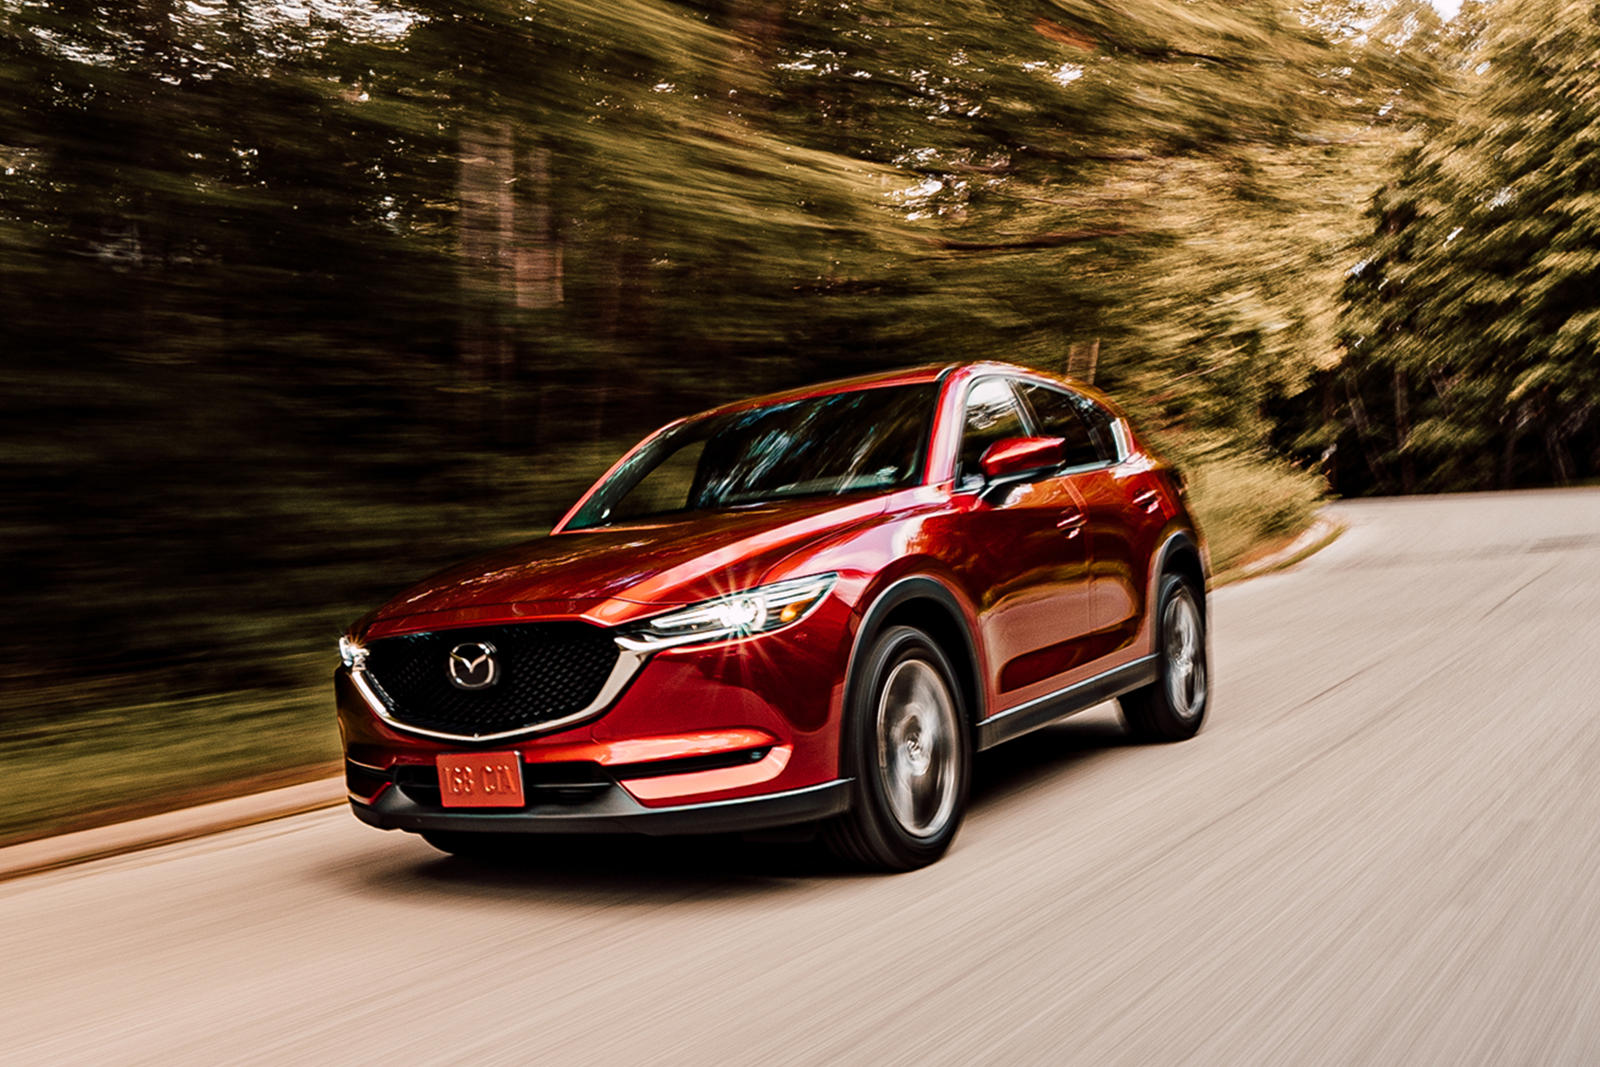 2020 Mazda Cx 5 Review Trims Specs Price New Interior Features